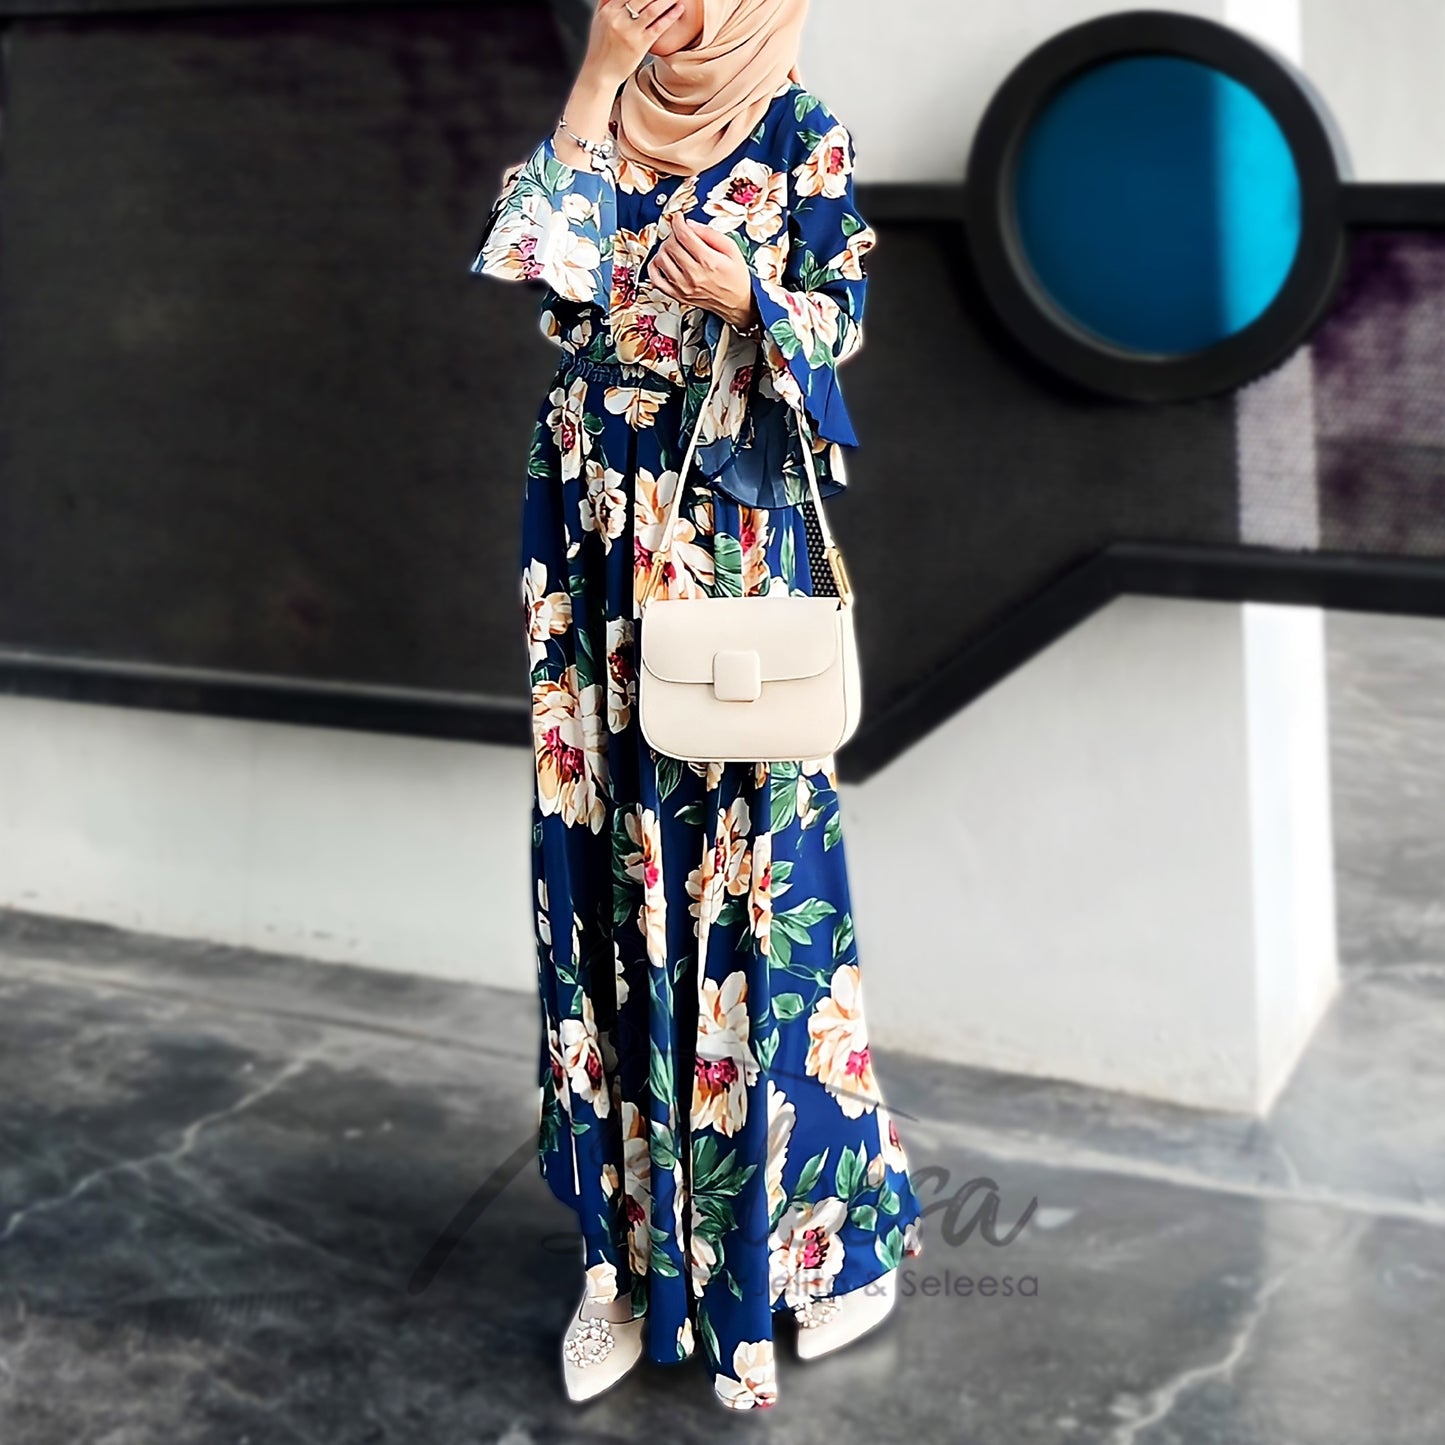 LALEESA (Blouse + Skirt) SET HARISA SW842805 <BF Friendly Series> Floral Printed Set Wear Blouse Muslimah Blouse Women